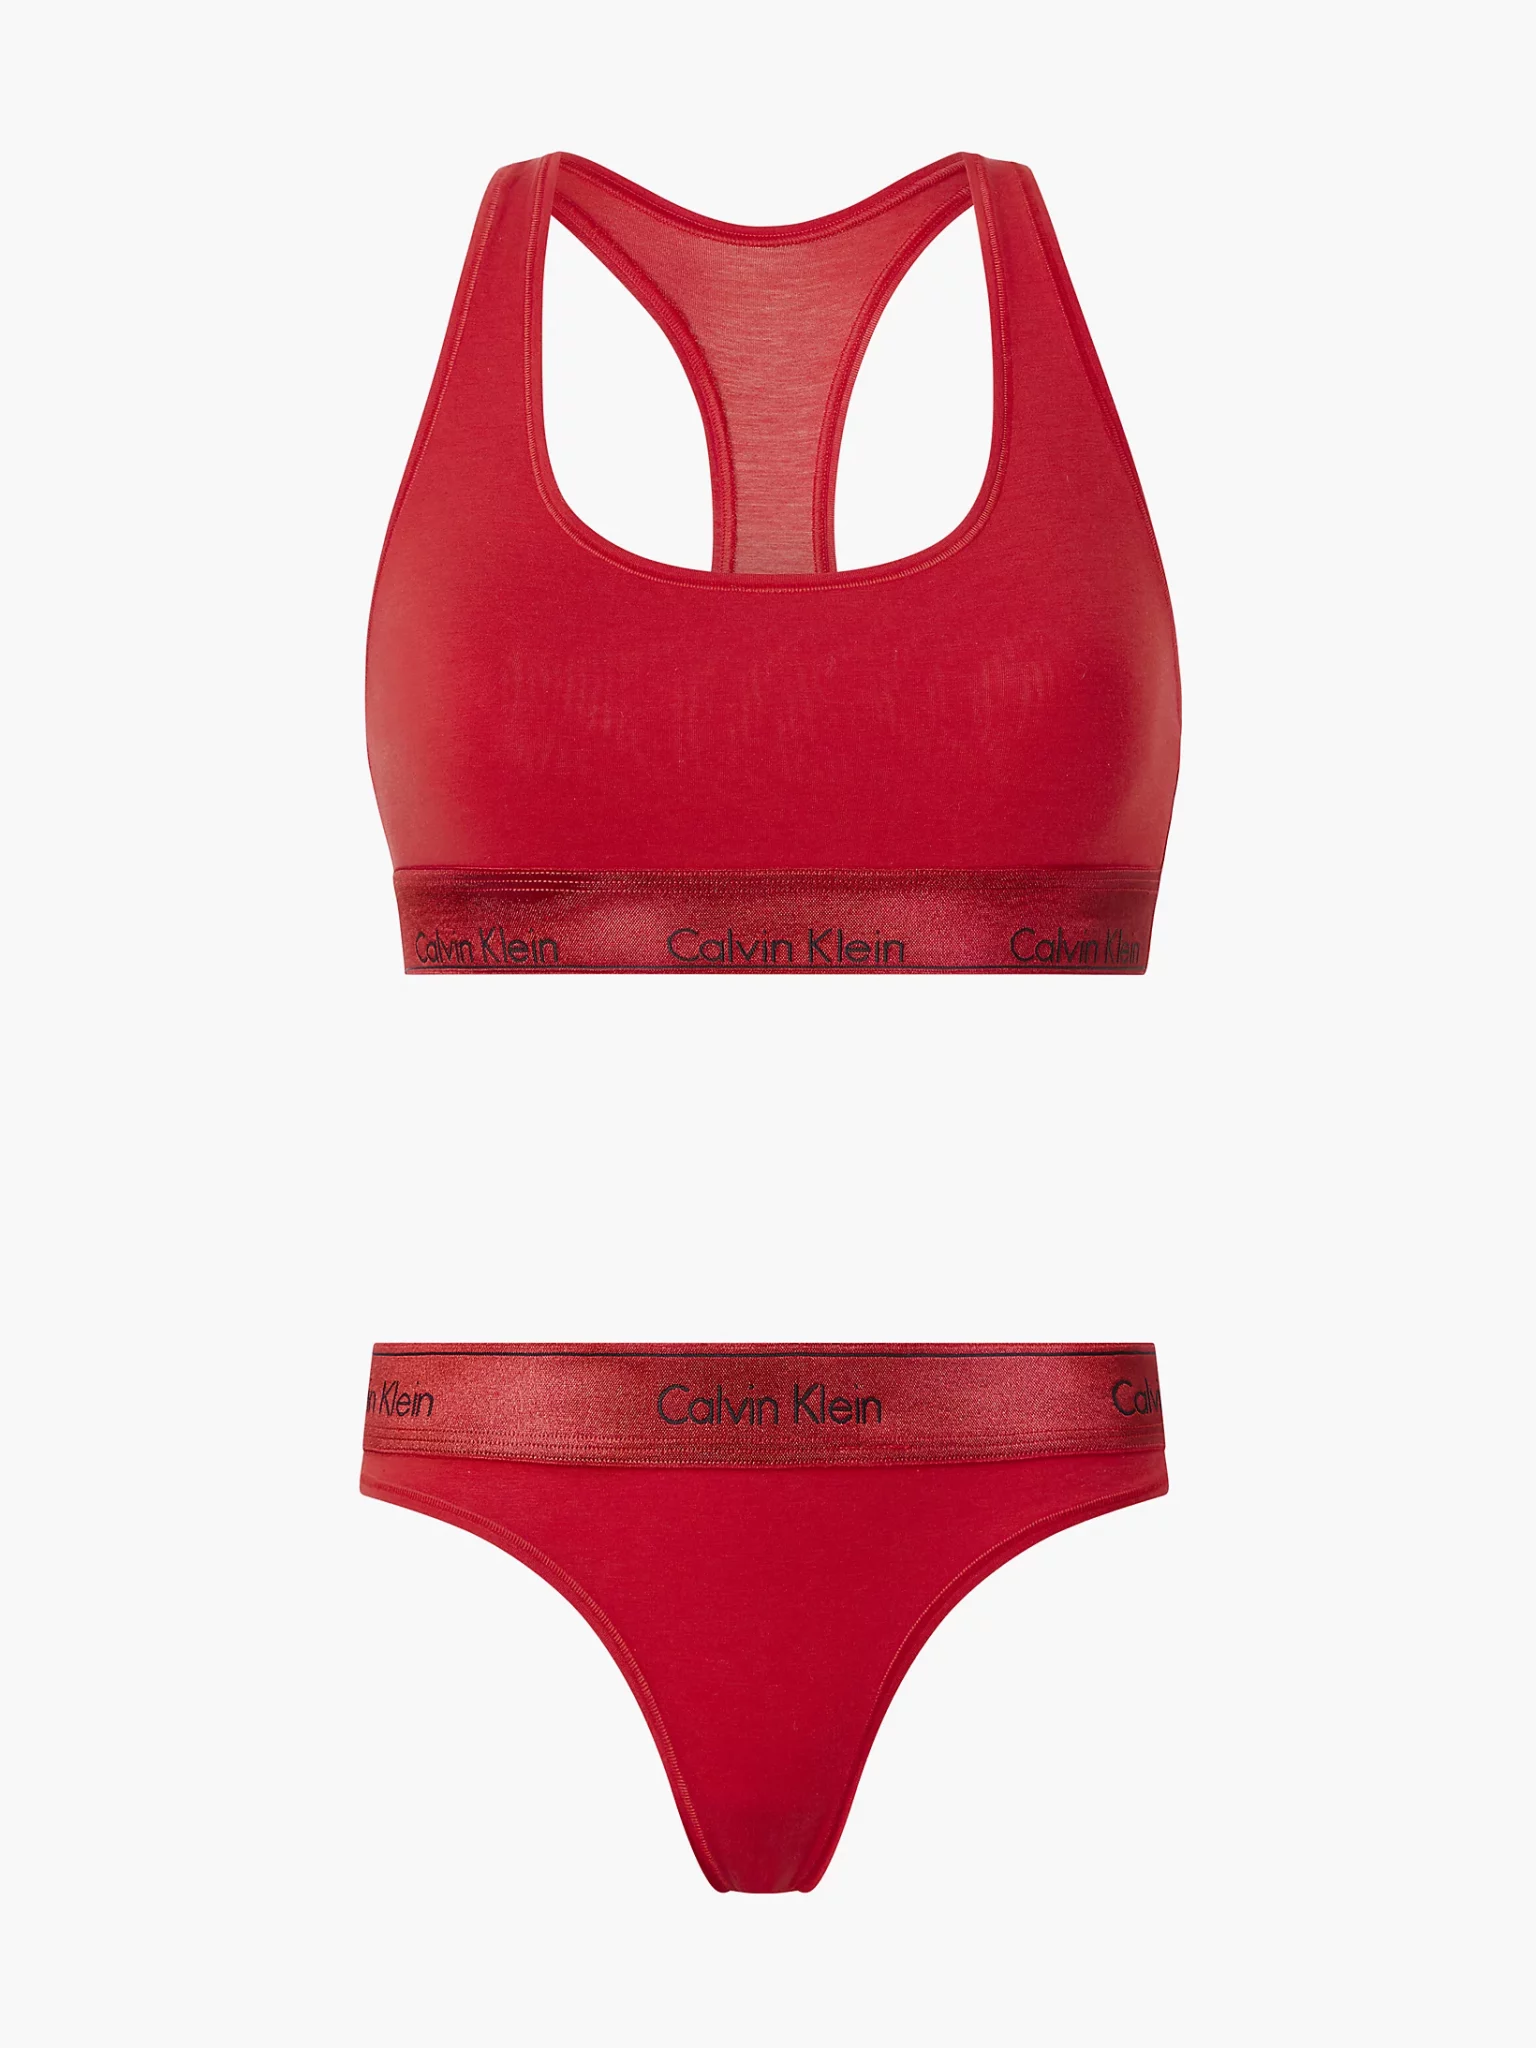 Women's set Calvin Klein top with thin straps briefs color red, Underwear  Women's Intimates Bra and Brief Sets clothes Women s - AliExpress